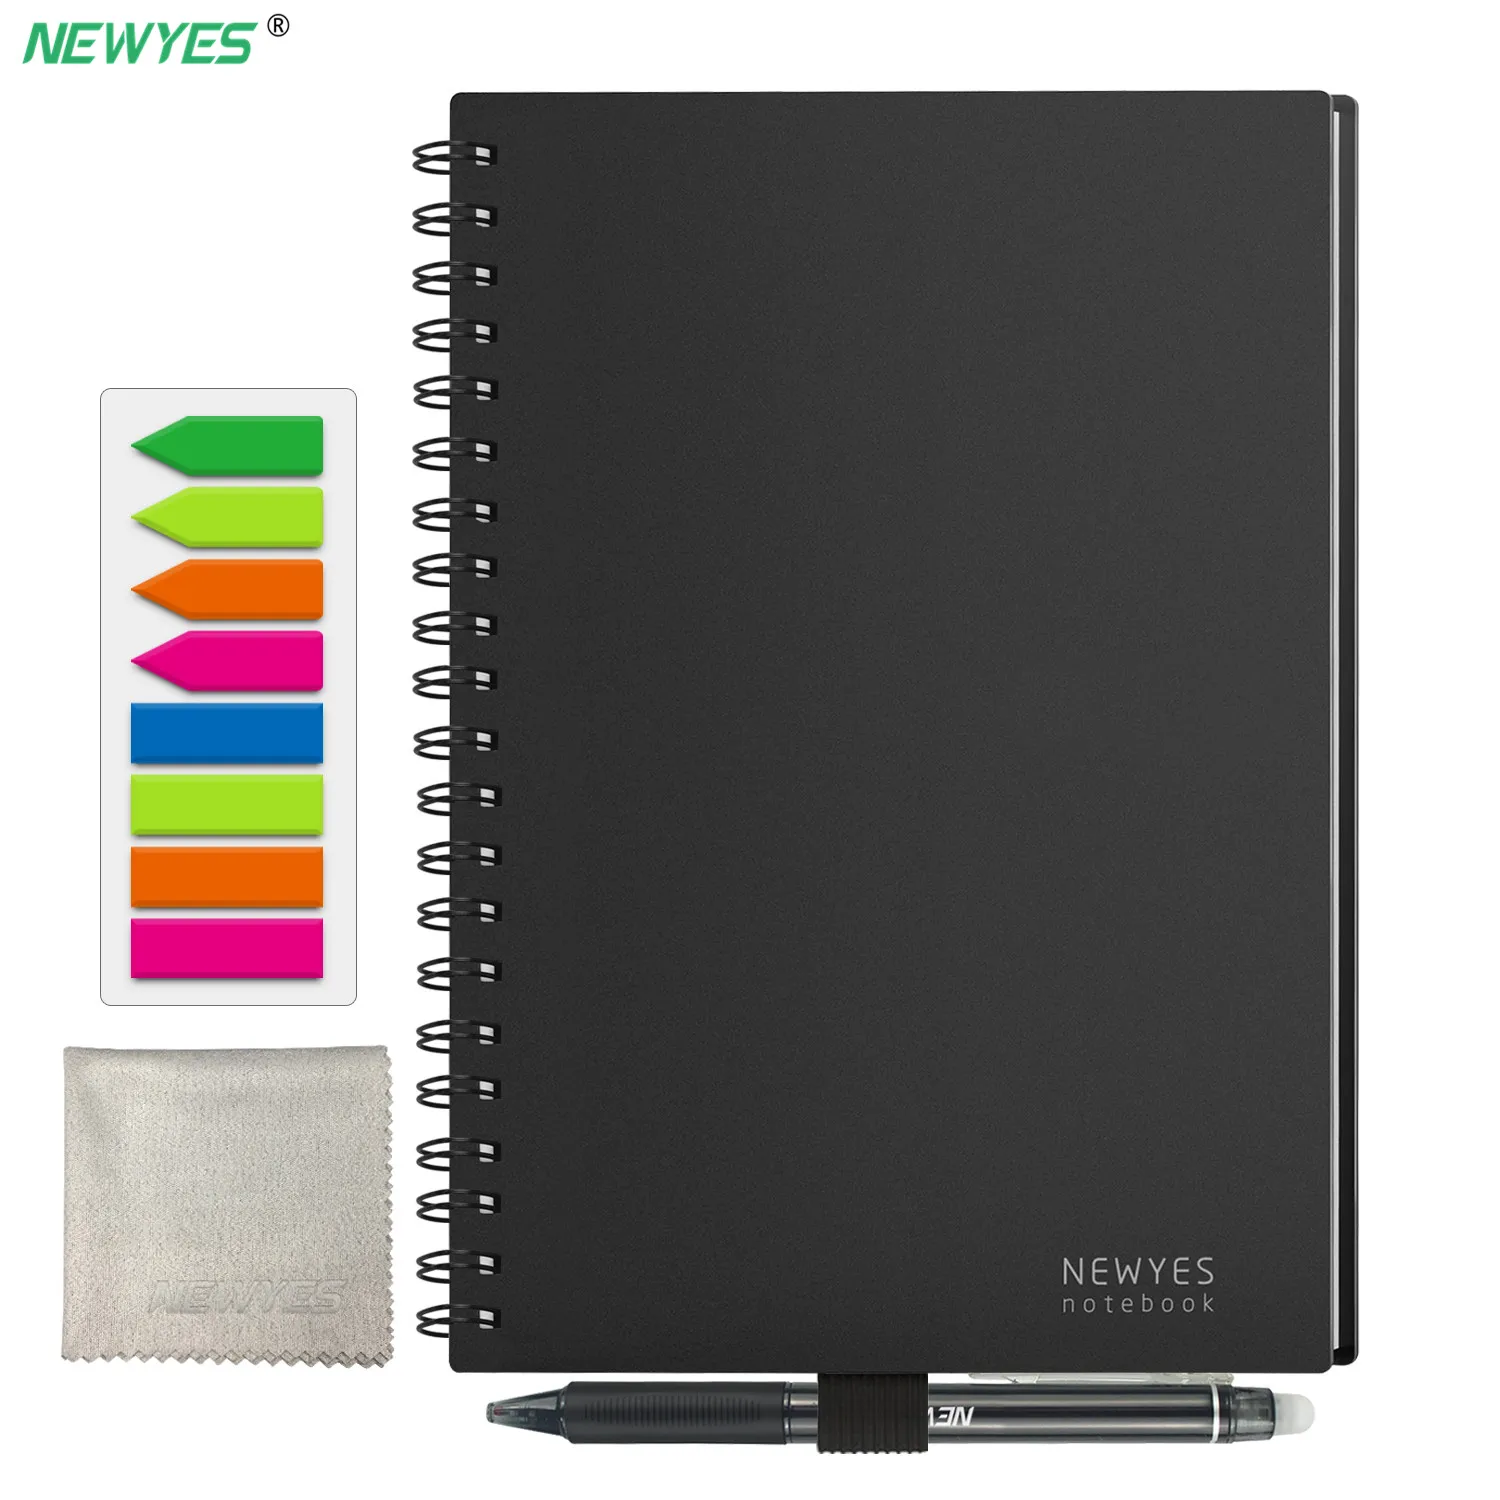 B5 Smart Erasable Notebook Paper Reusable Wirebound Notebook Cloud Storage App Connection With Pen School Office Supplies